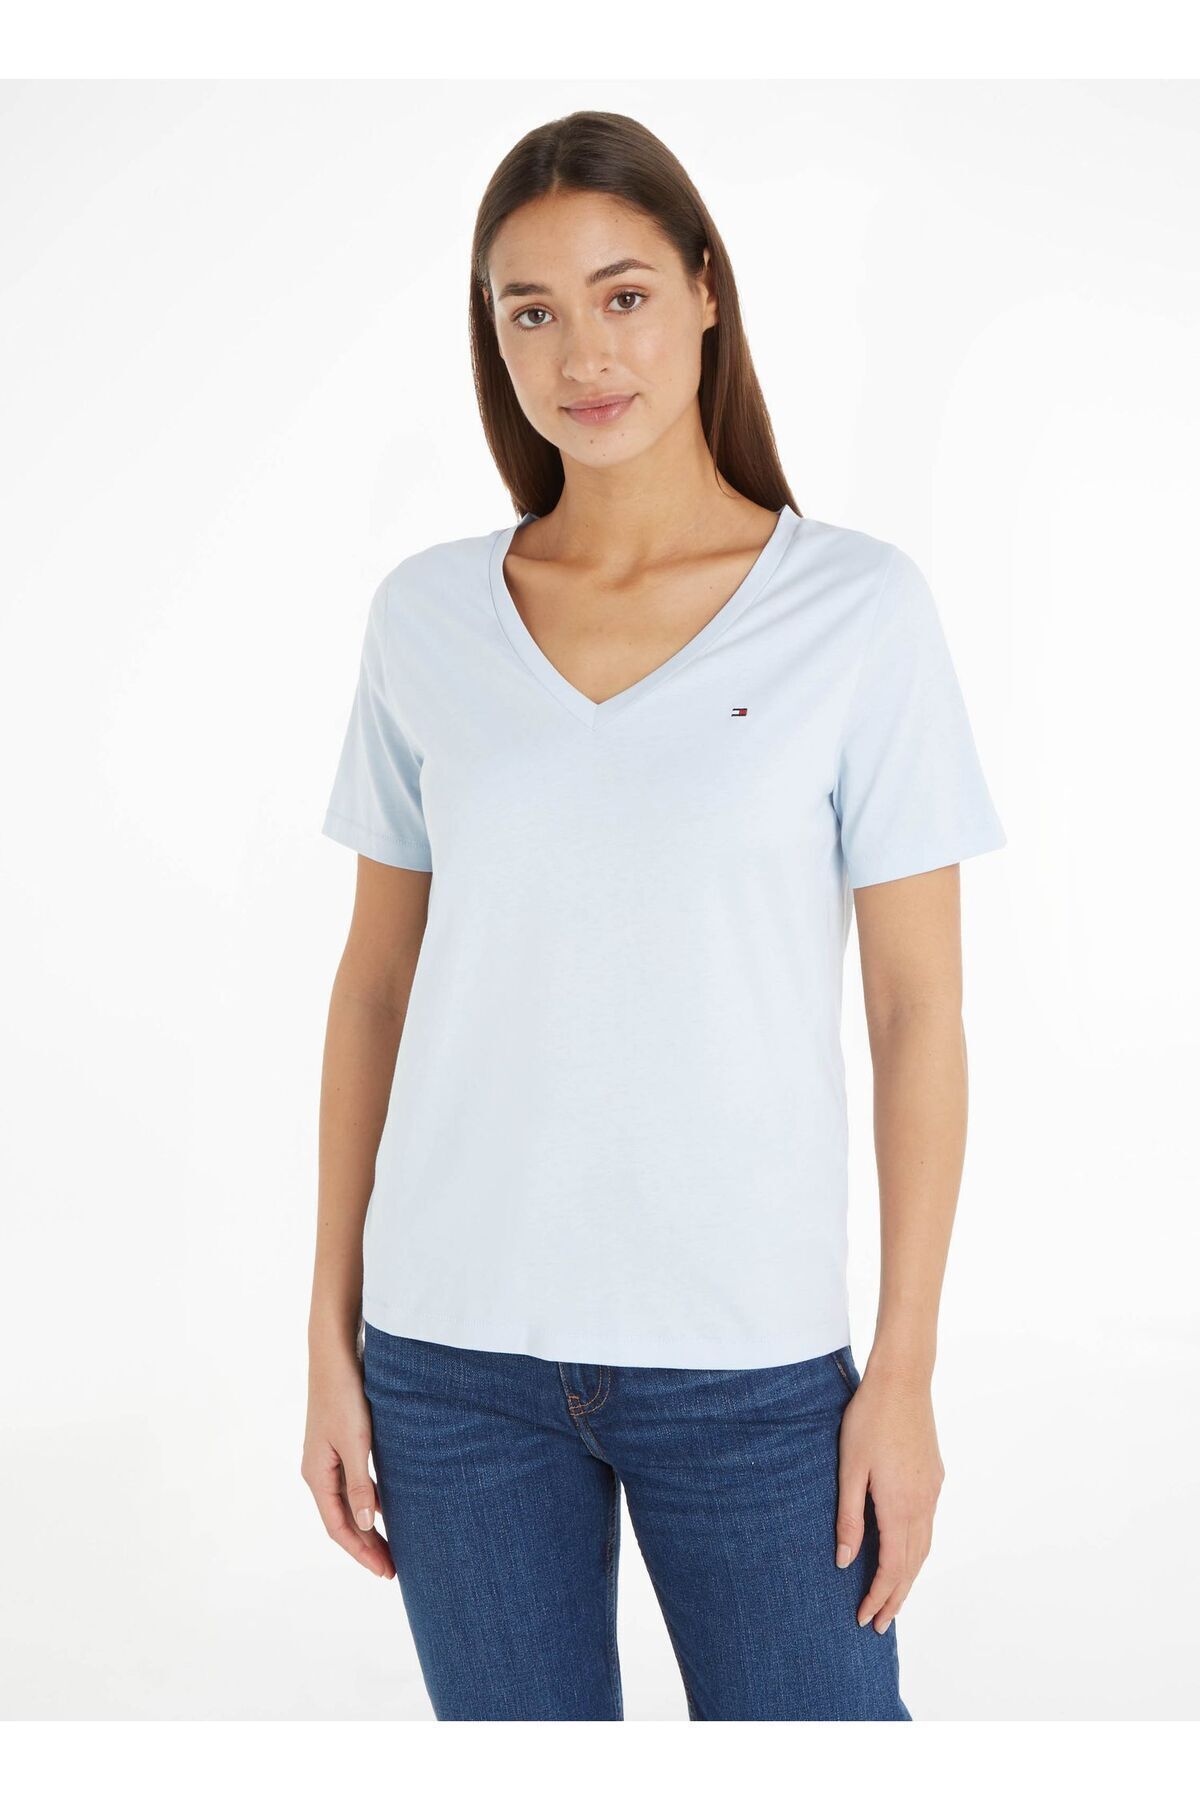 Tommy Hilfiger Kadın Dokuma Kumaş Kısa Kol Düz Model Açık Mavi T-Shirt WW0WW39781-C1O